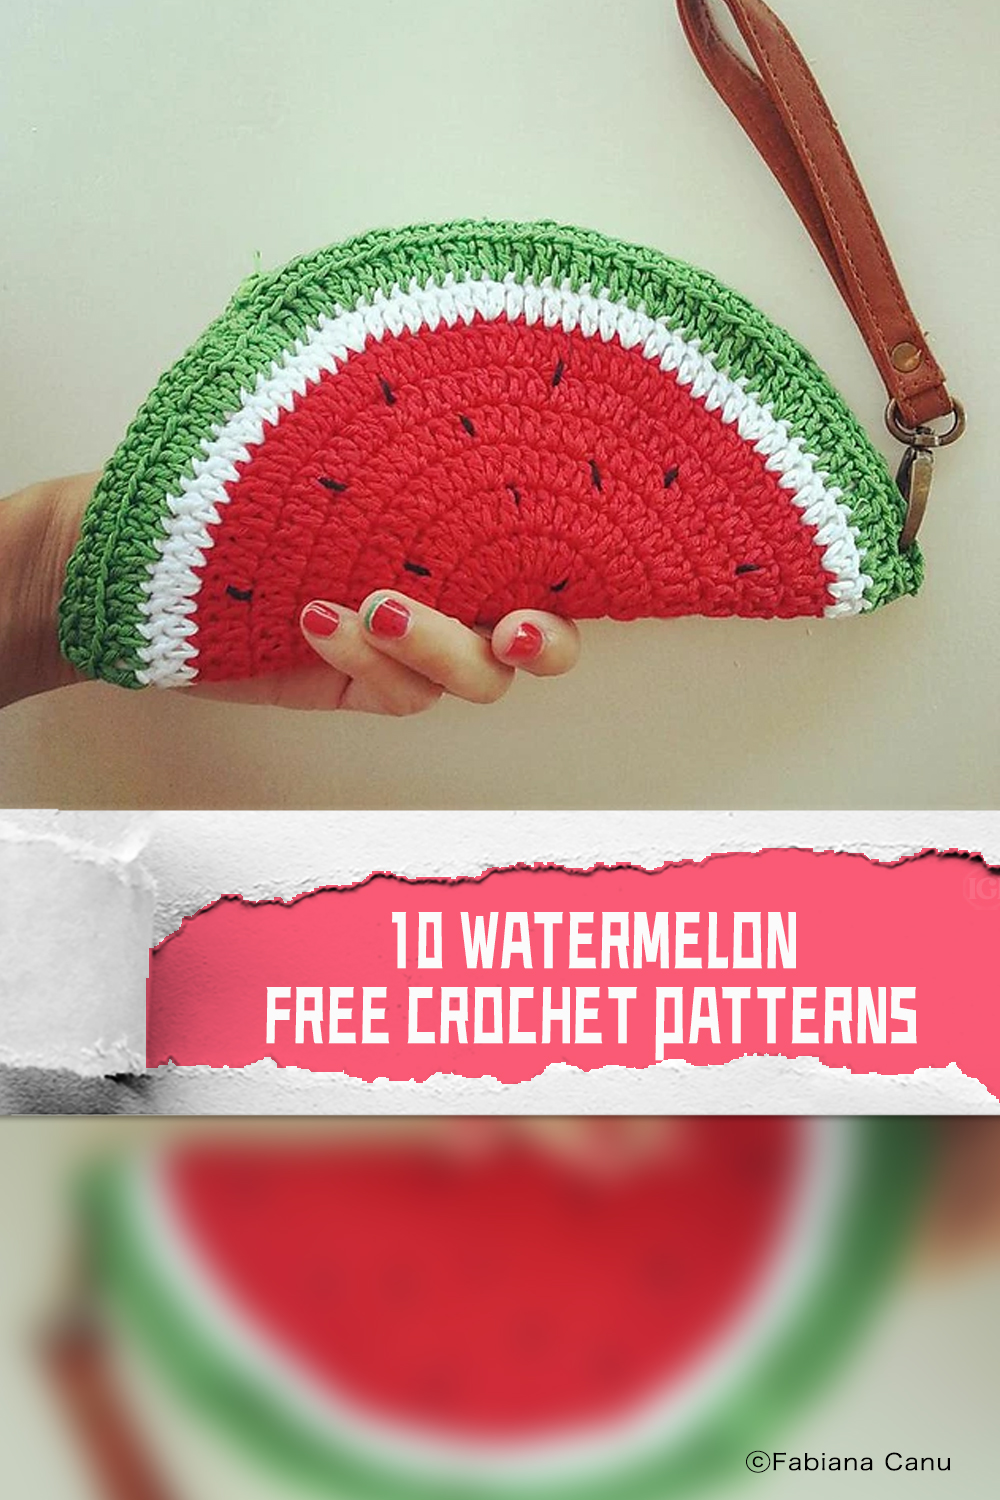 10 FREE Watermelon Crochet Patterns